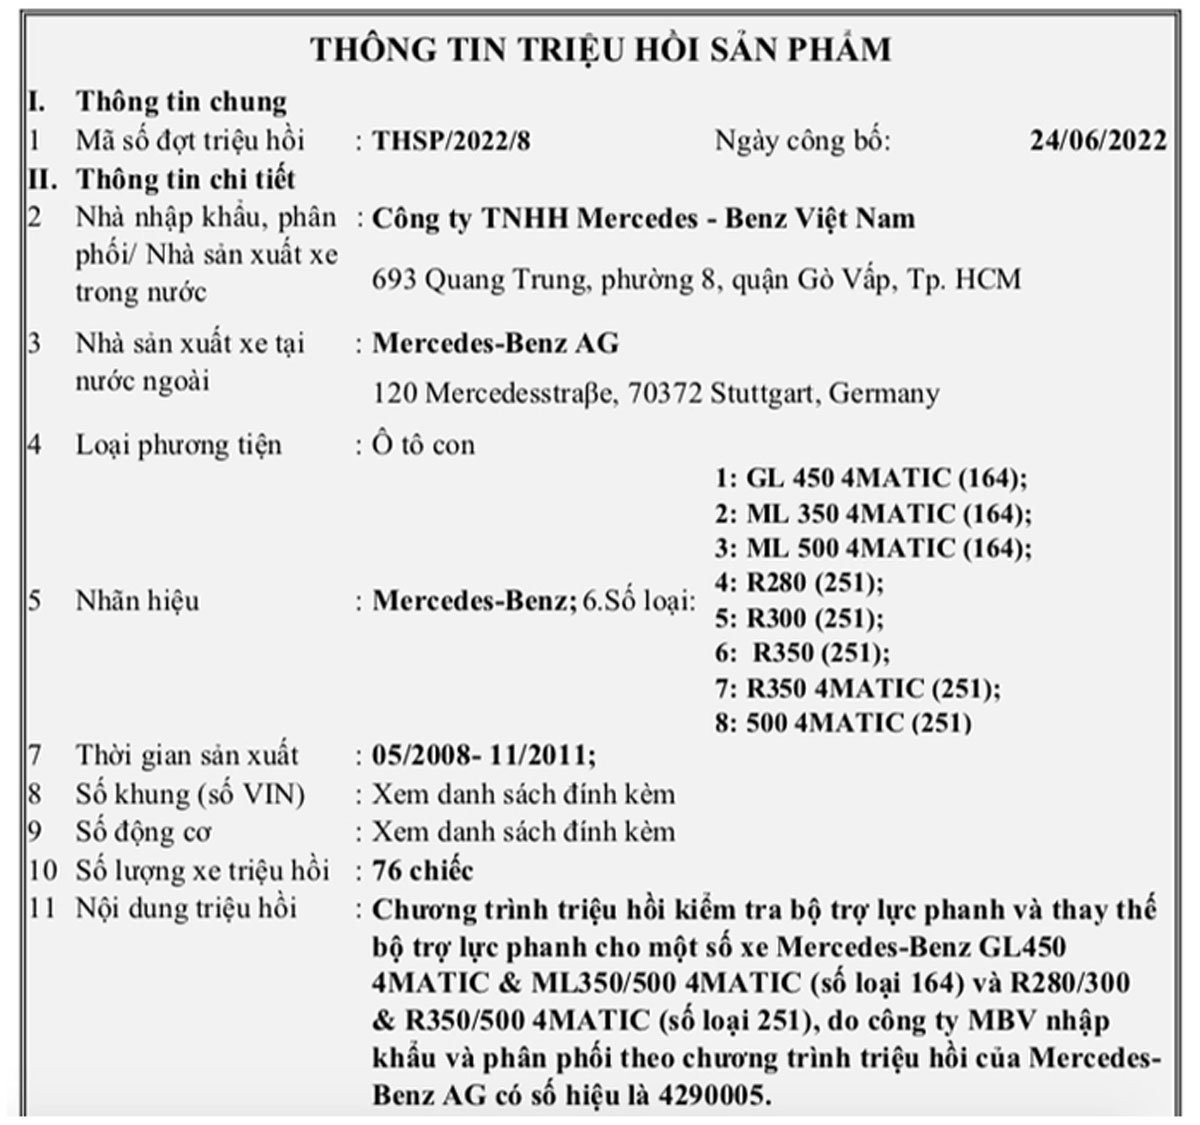 thong-tin-trieu-hoi-xe-685e-1659087554.jpg